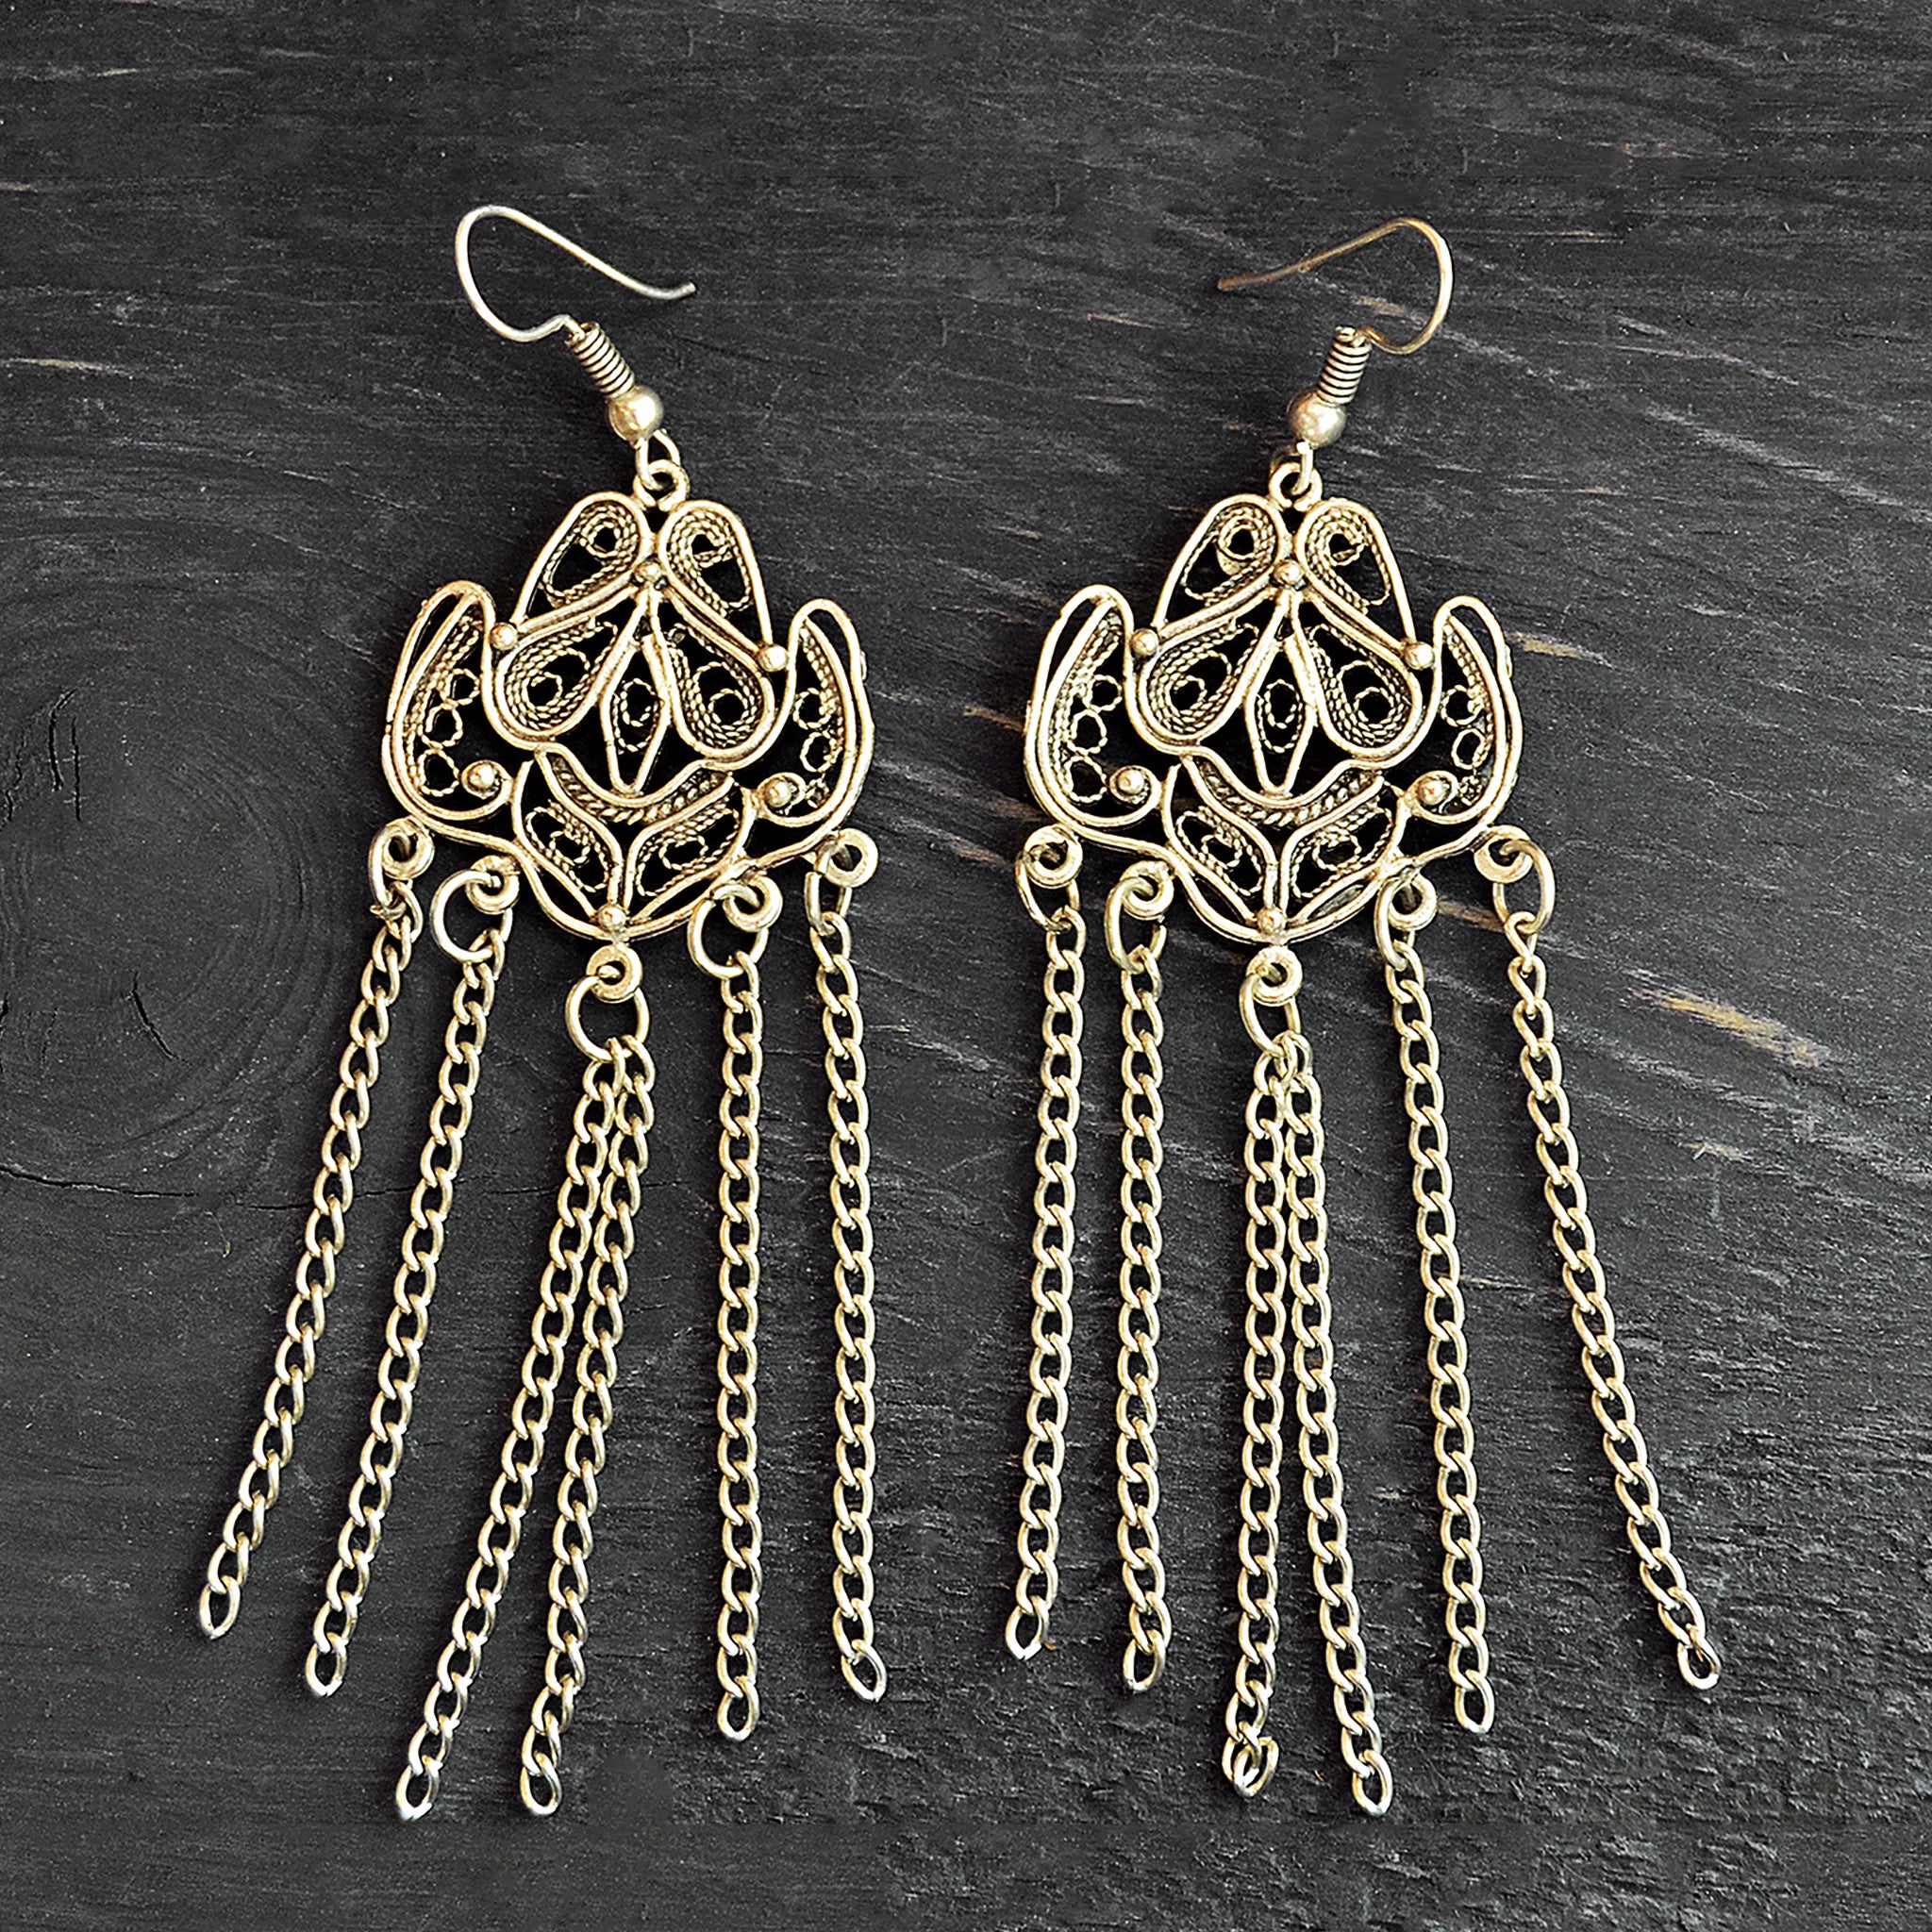 Ottoman filigree earrings